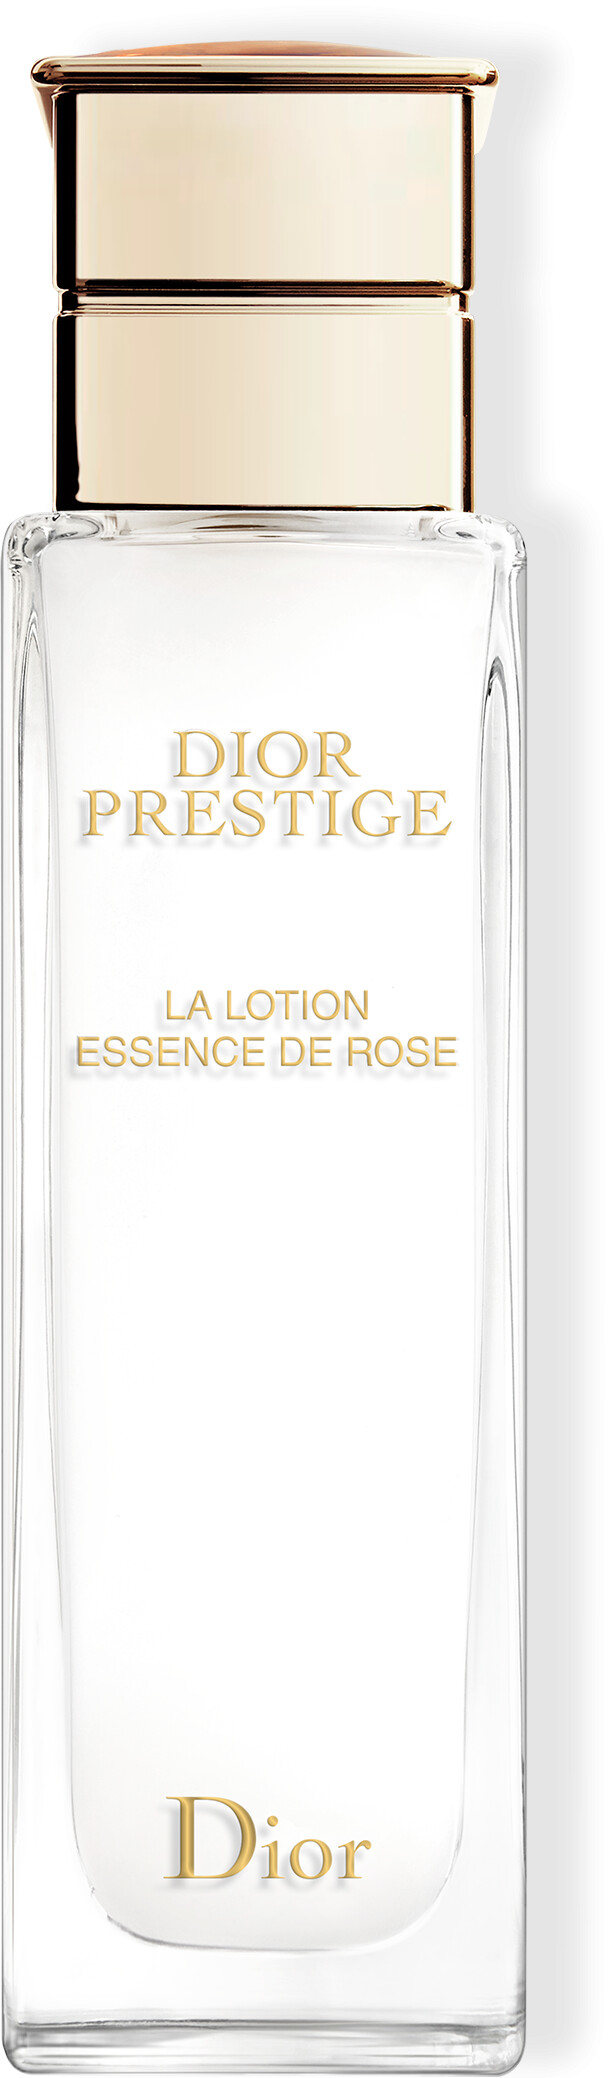 DIOR Prestige La Lotion Essence de Rose 150ml